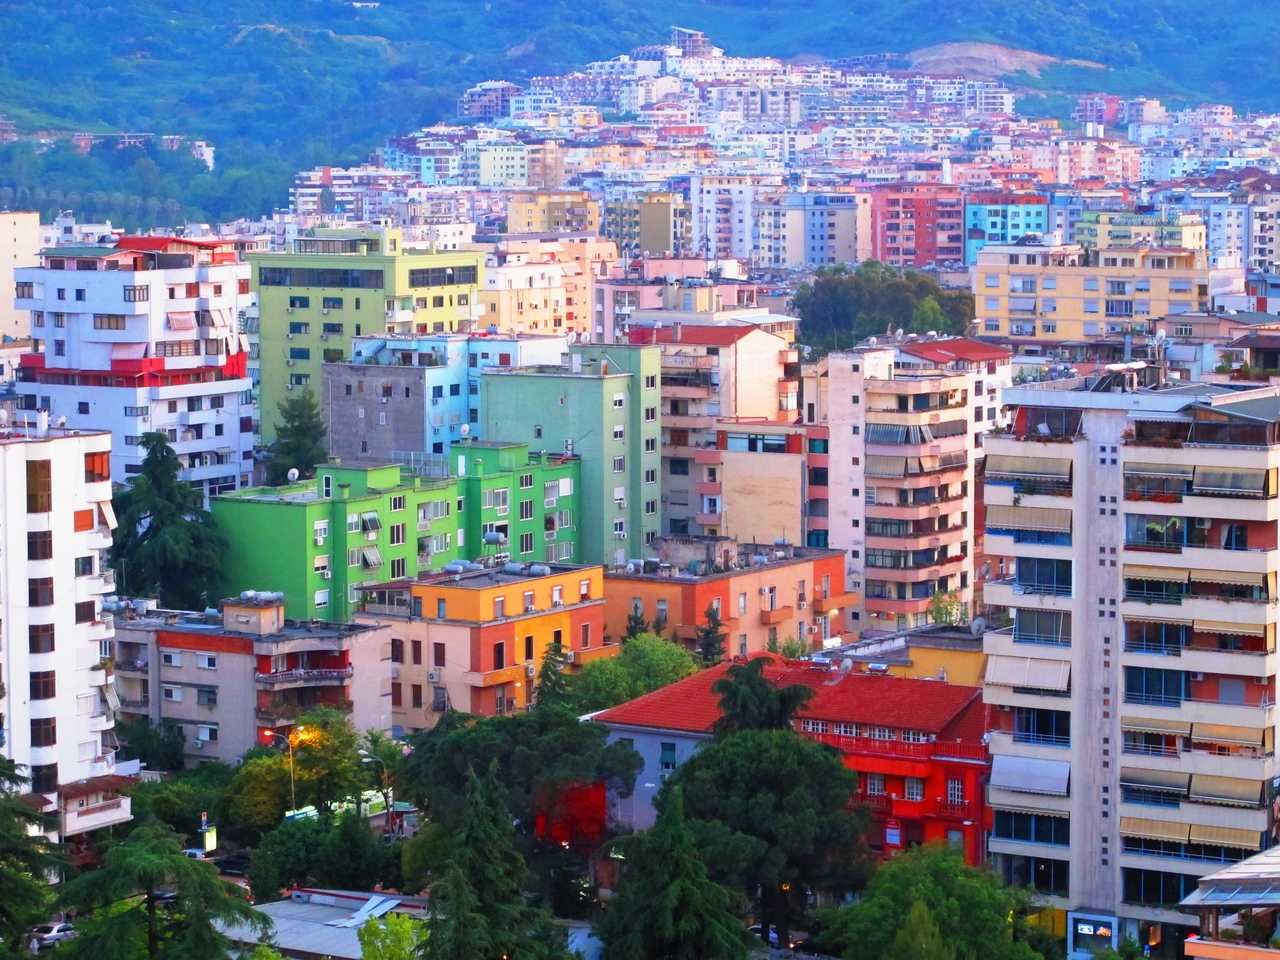 Ville de Tirana la capitale de l'Albanie